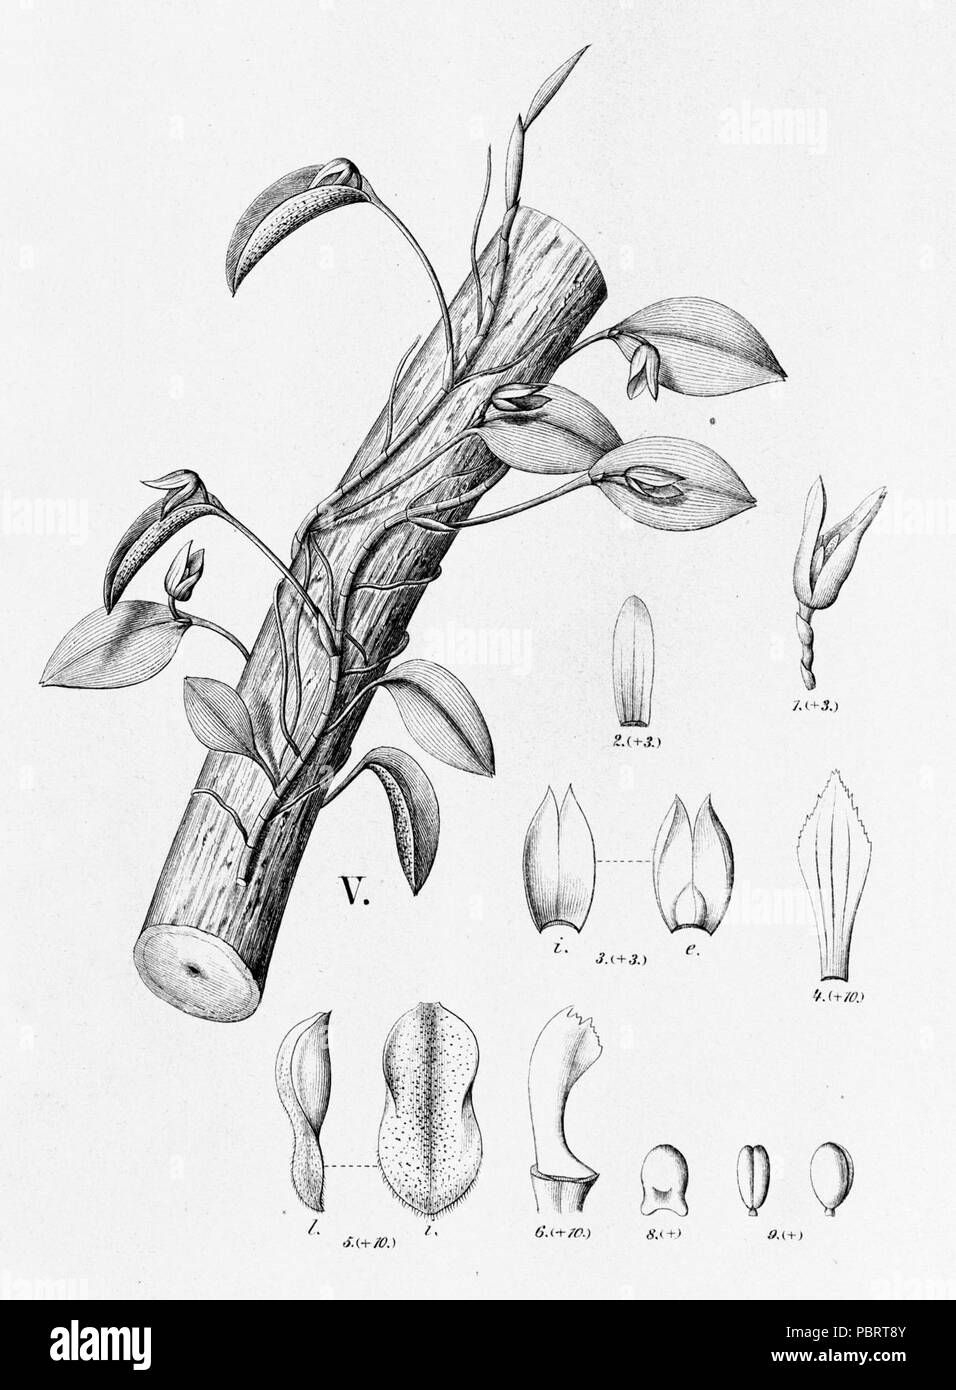 Acianthera serpentula (as syn. Pleurothallis serpentula) - cutout from Fl.Br.3-4-97 - fig. V. Stock Photo